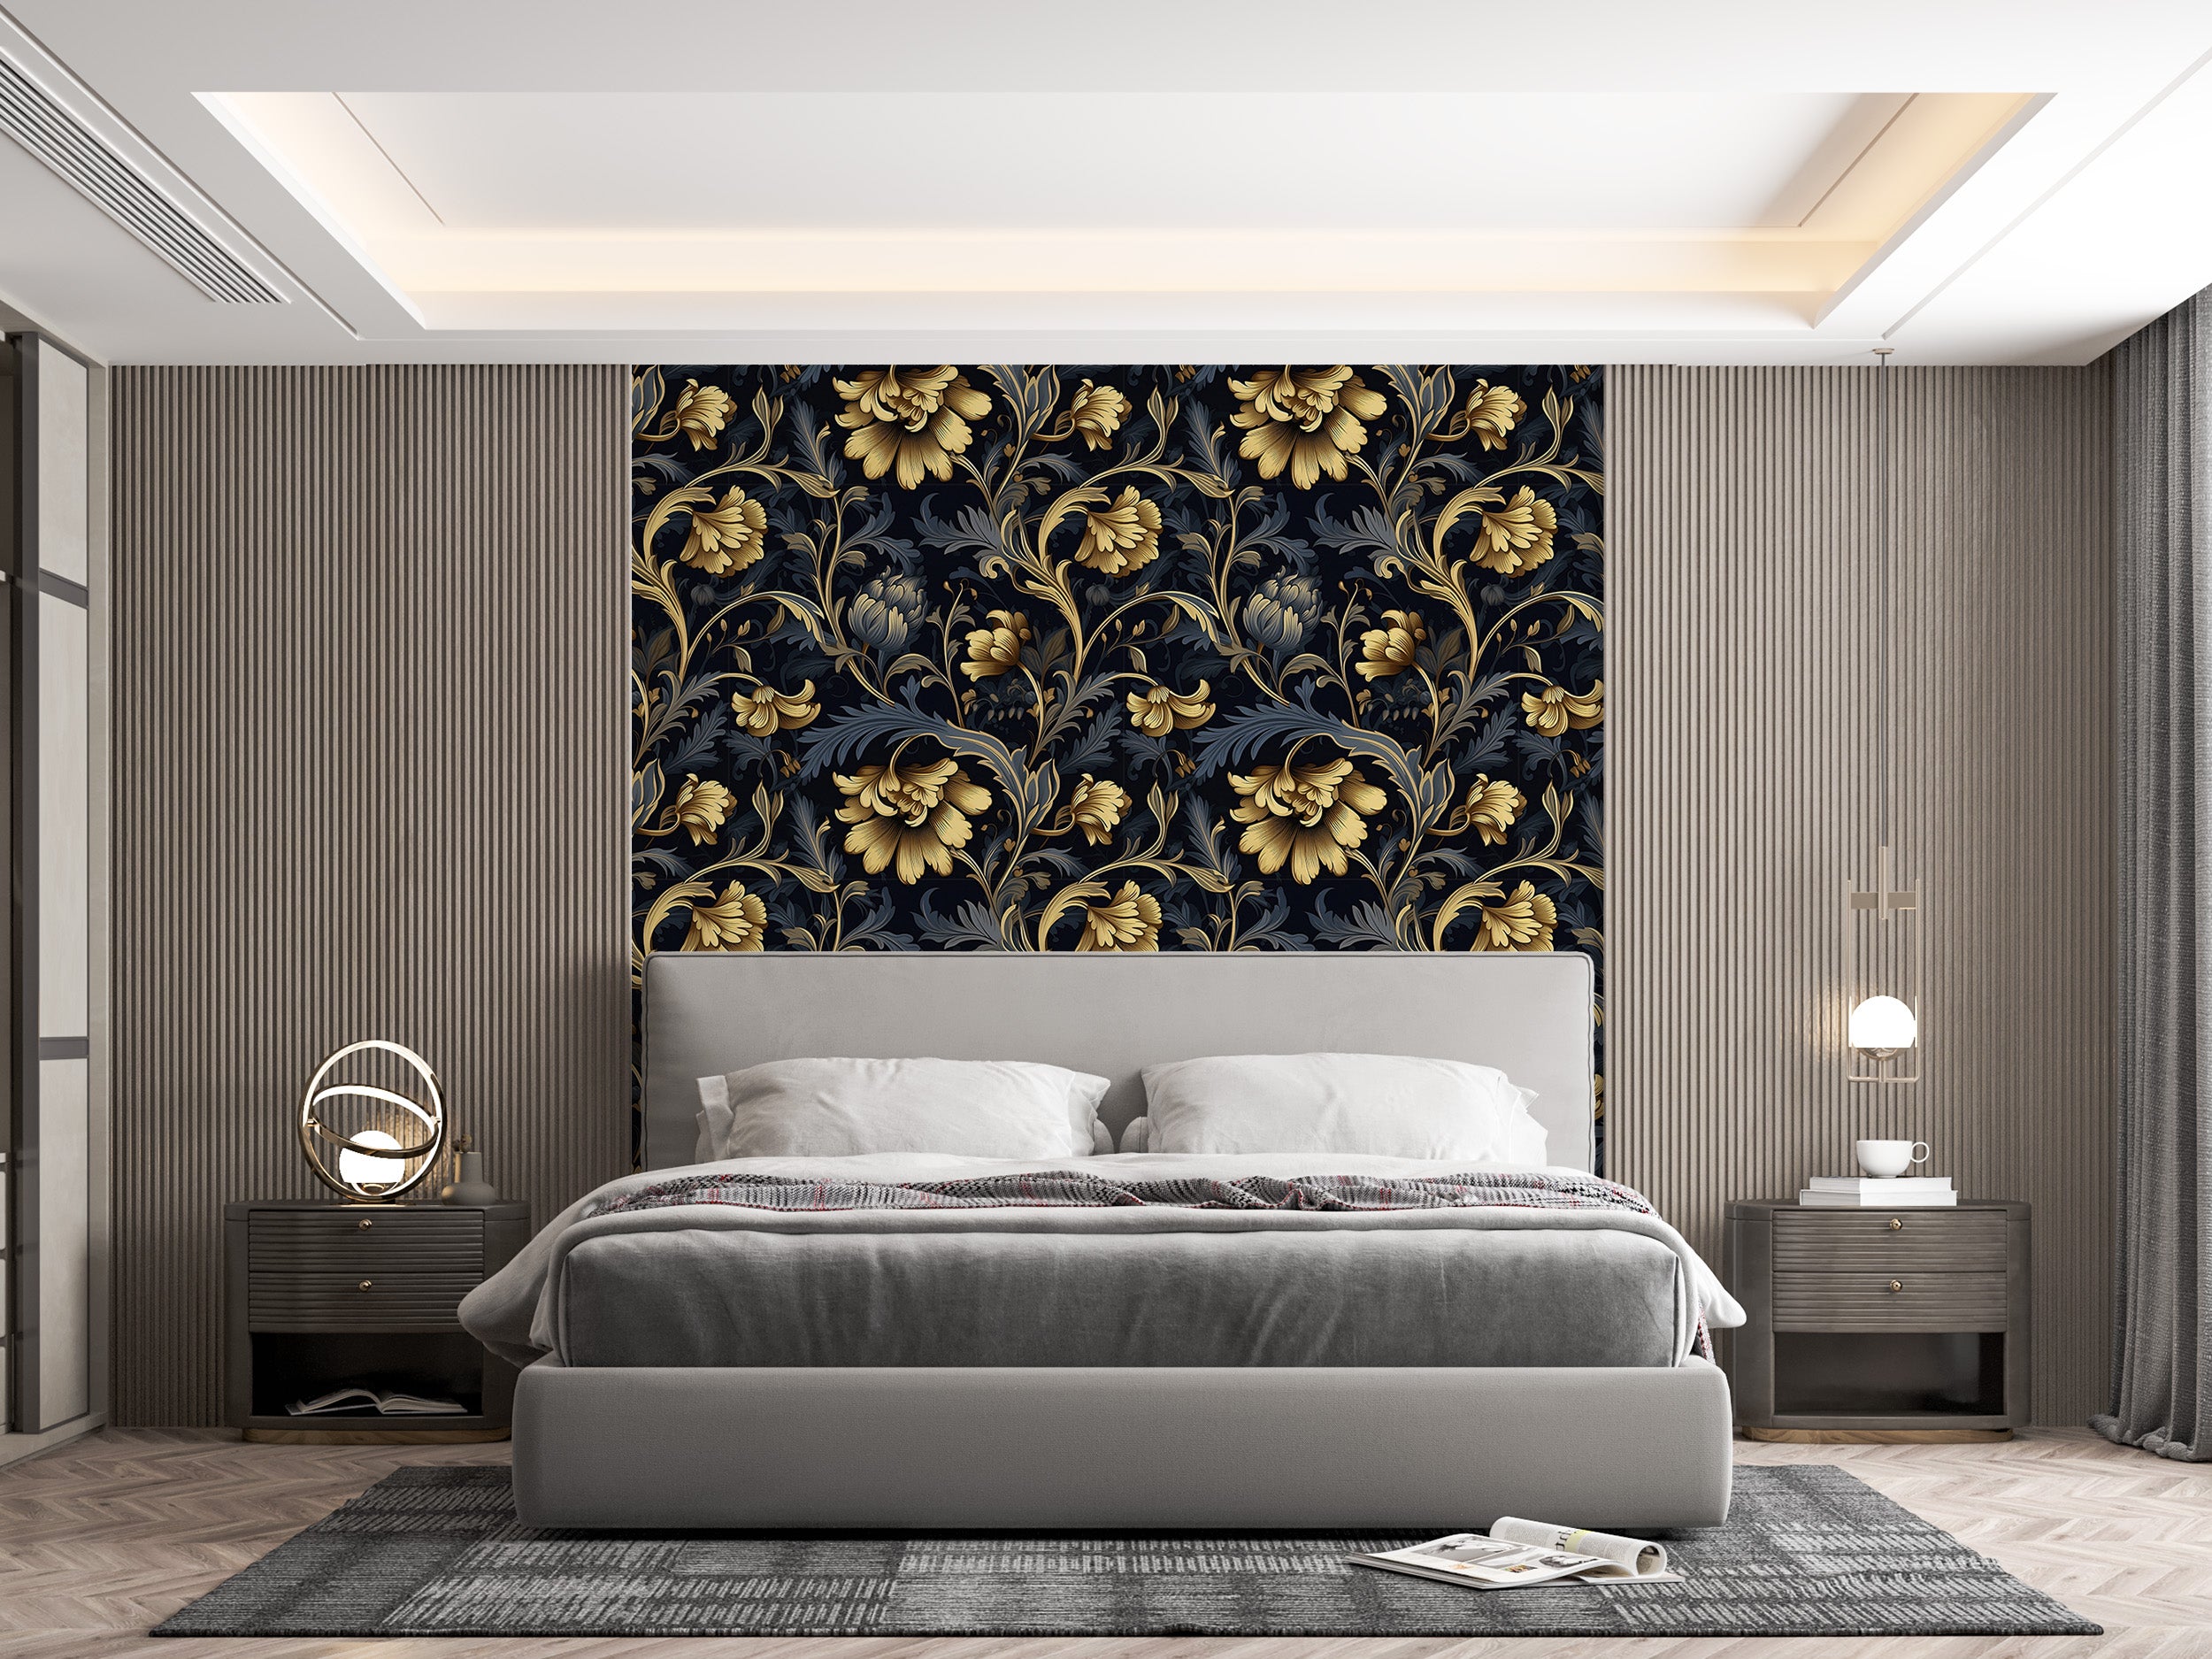 Enhance Decor with Luxury Dark Floral Wallpaper